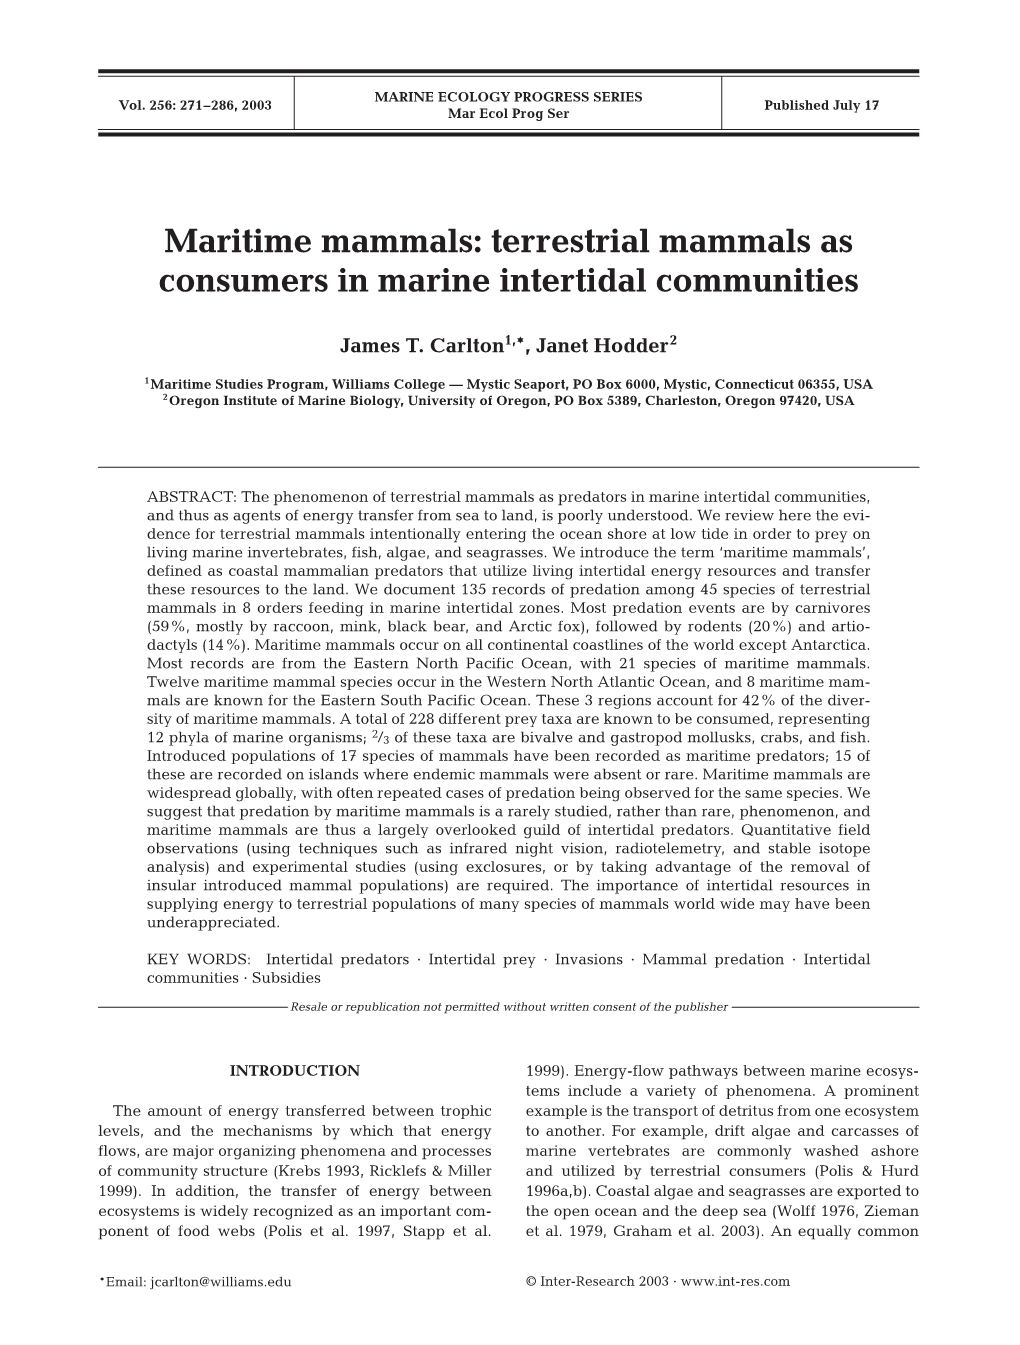 Terrestrial Mammals As Consumers in Marine Intertidal Communities